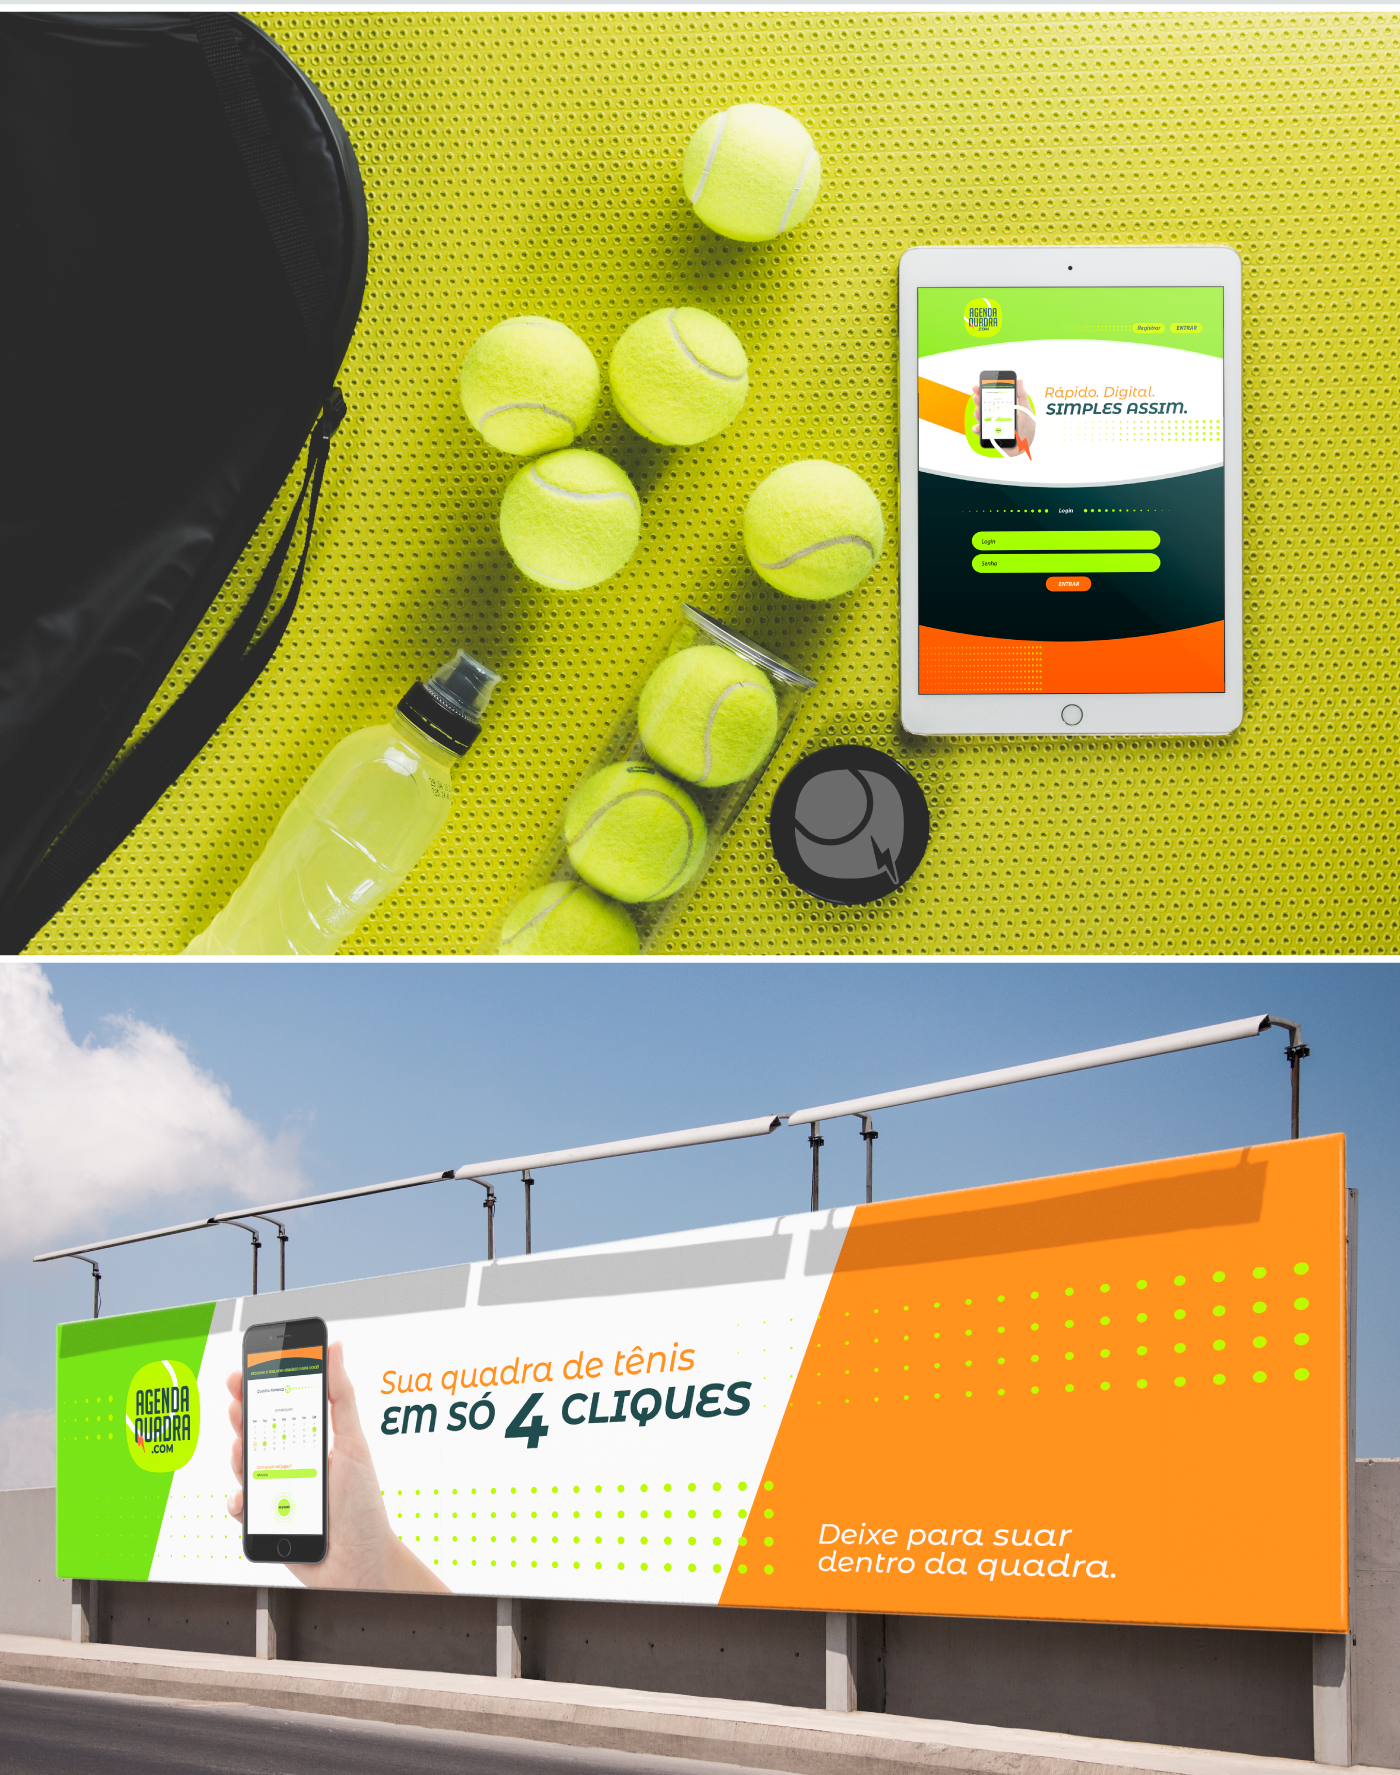 agenda quadra tennis court schedule tennis app green tennis ball bola de tênis aplicativo